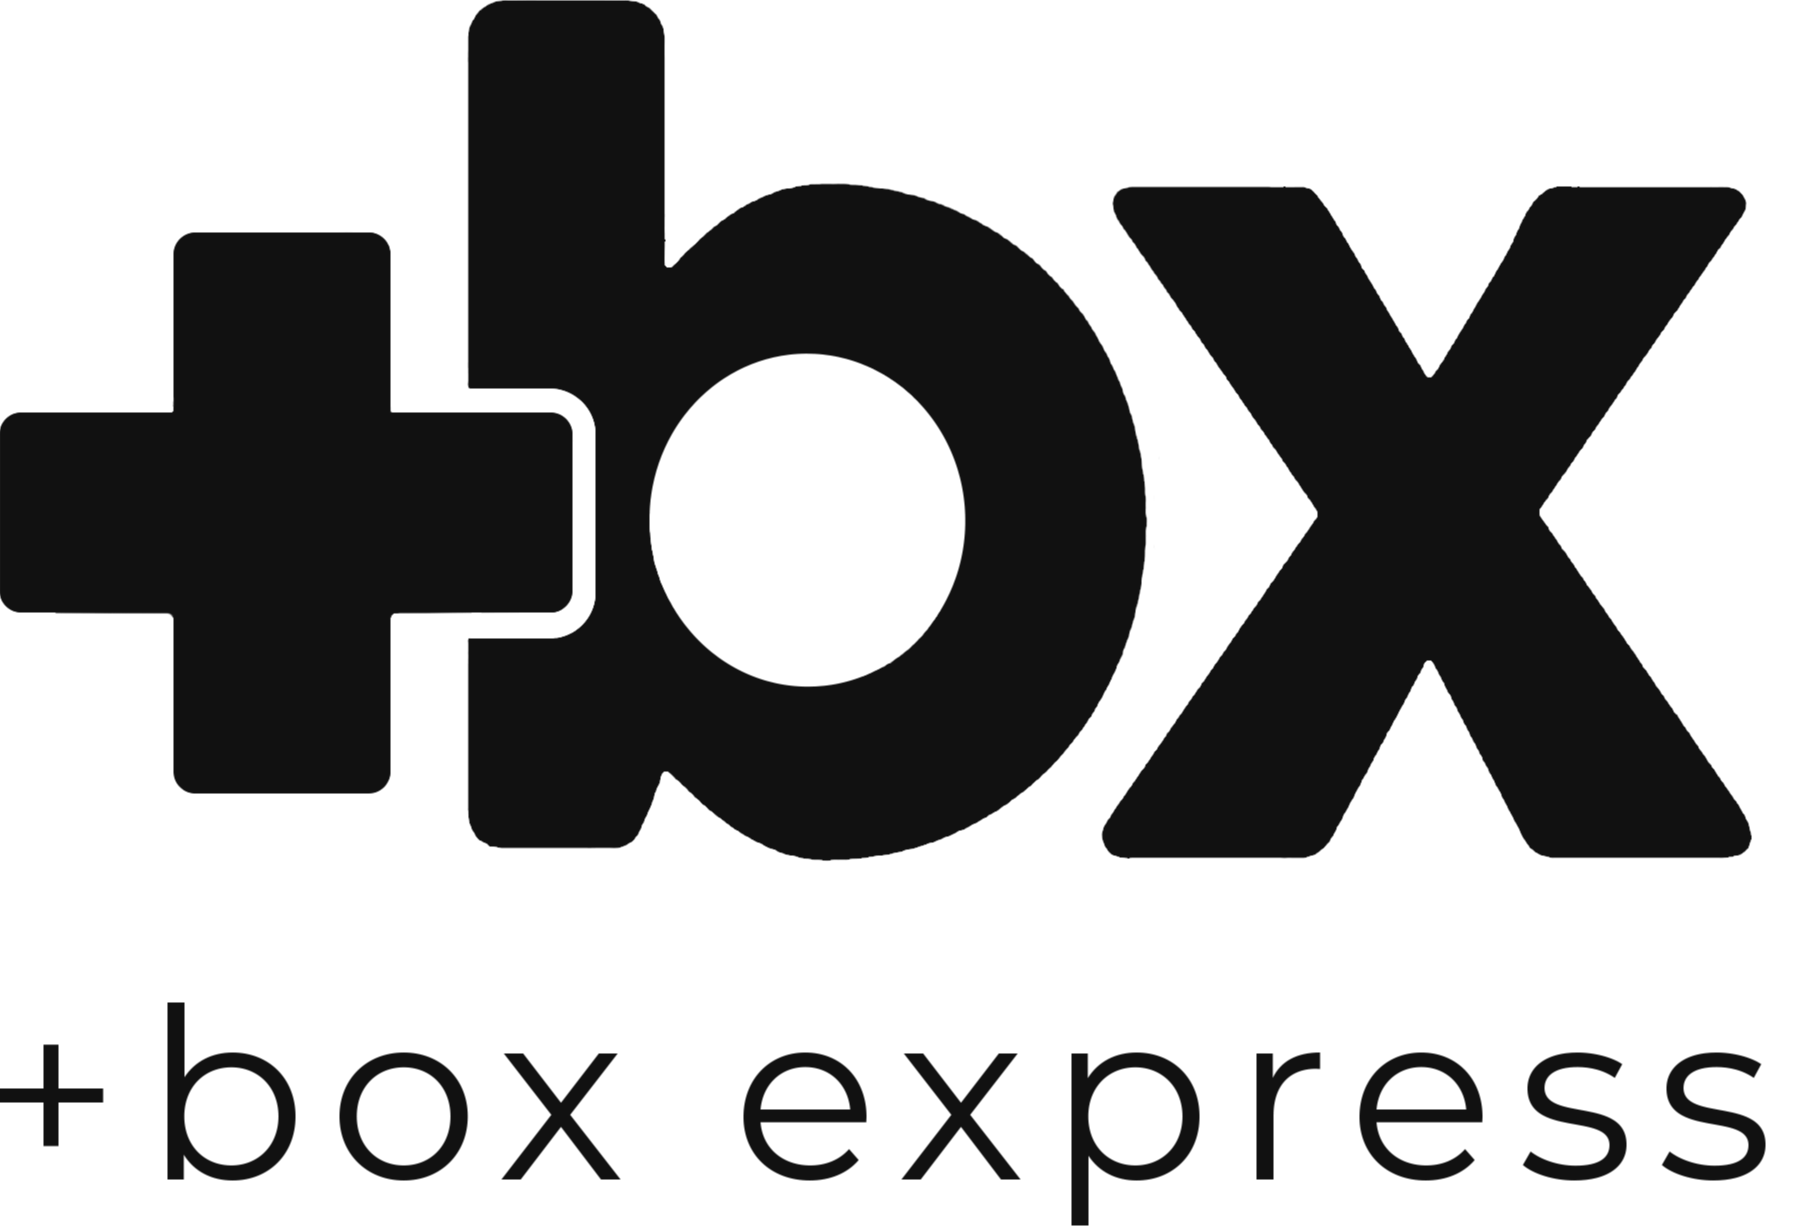 +box express